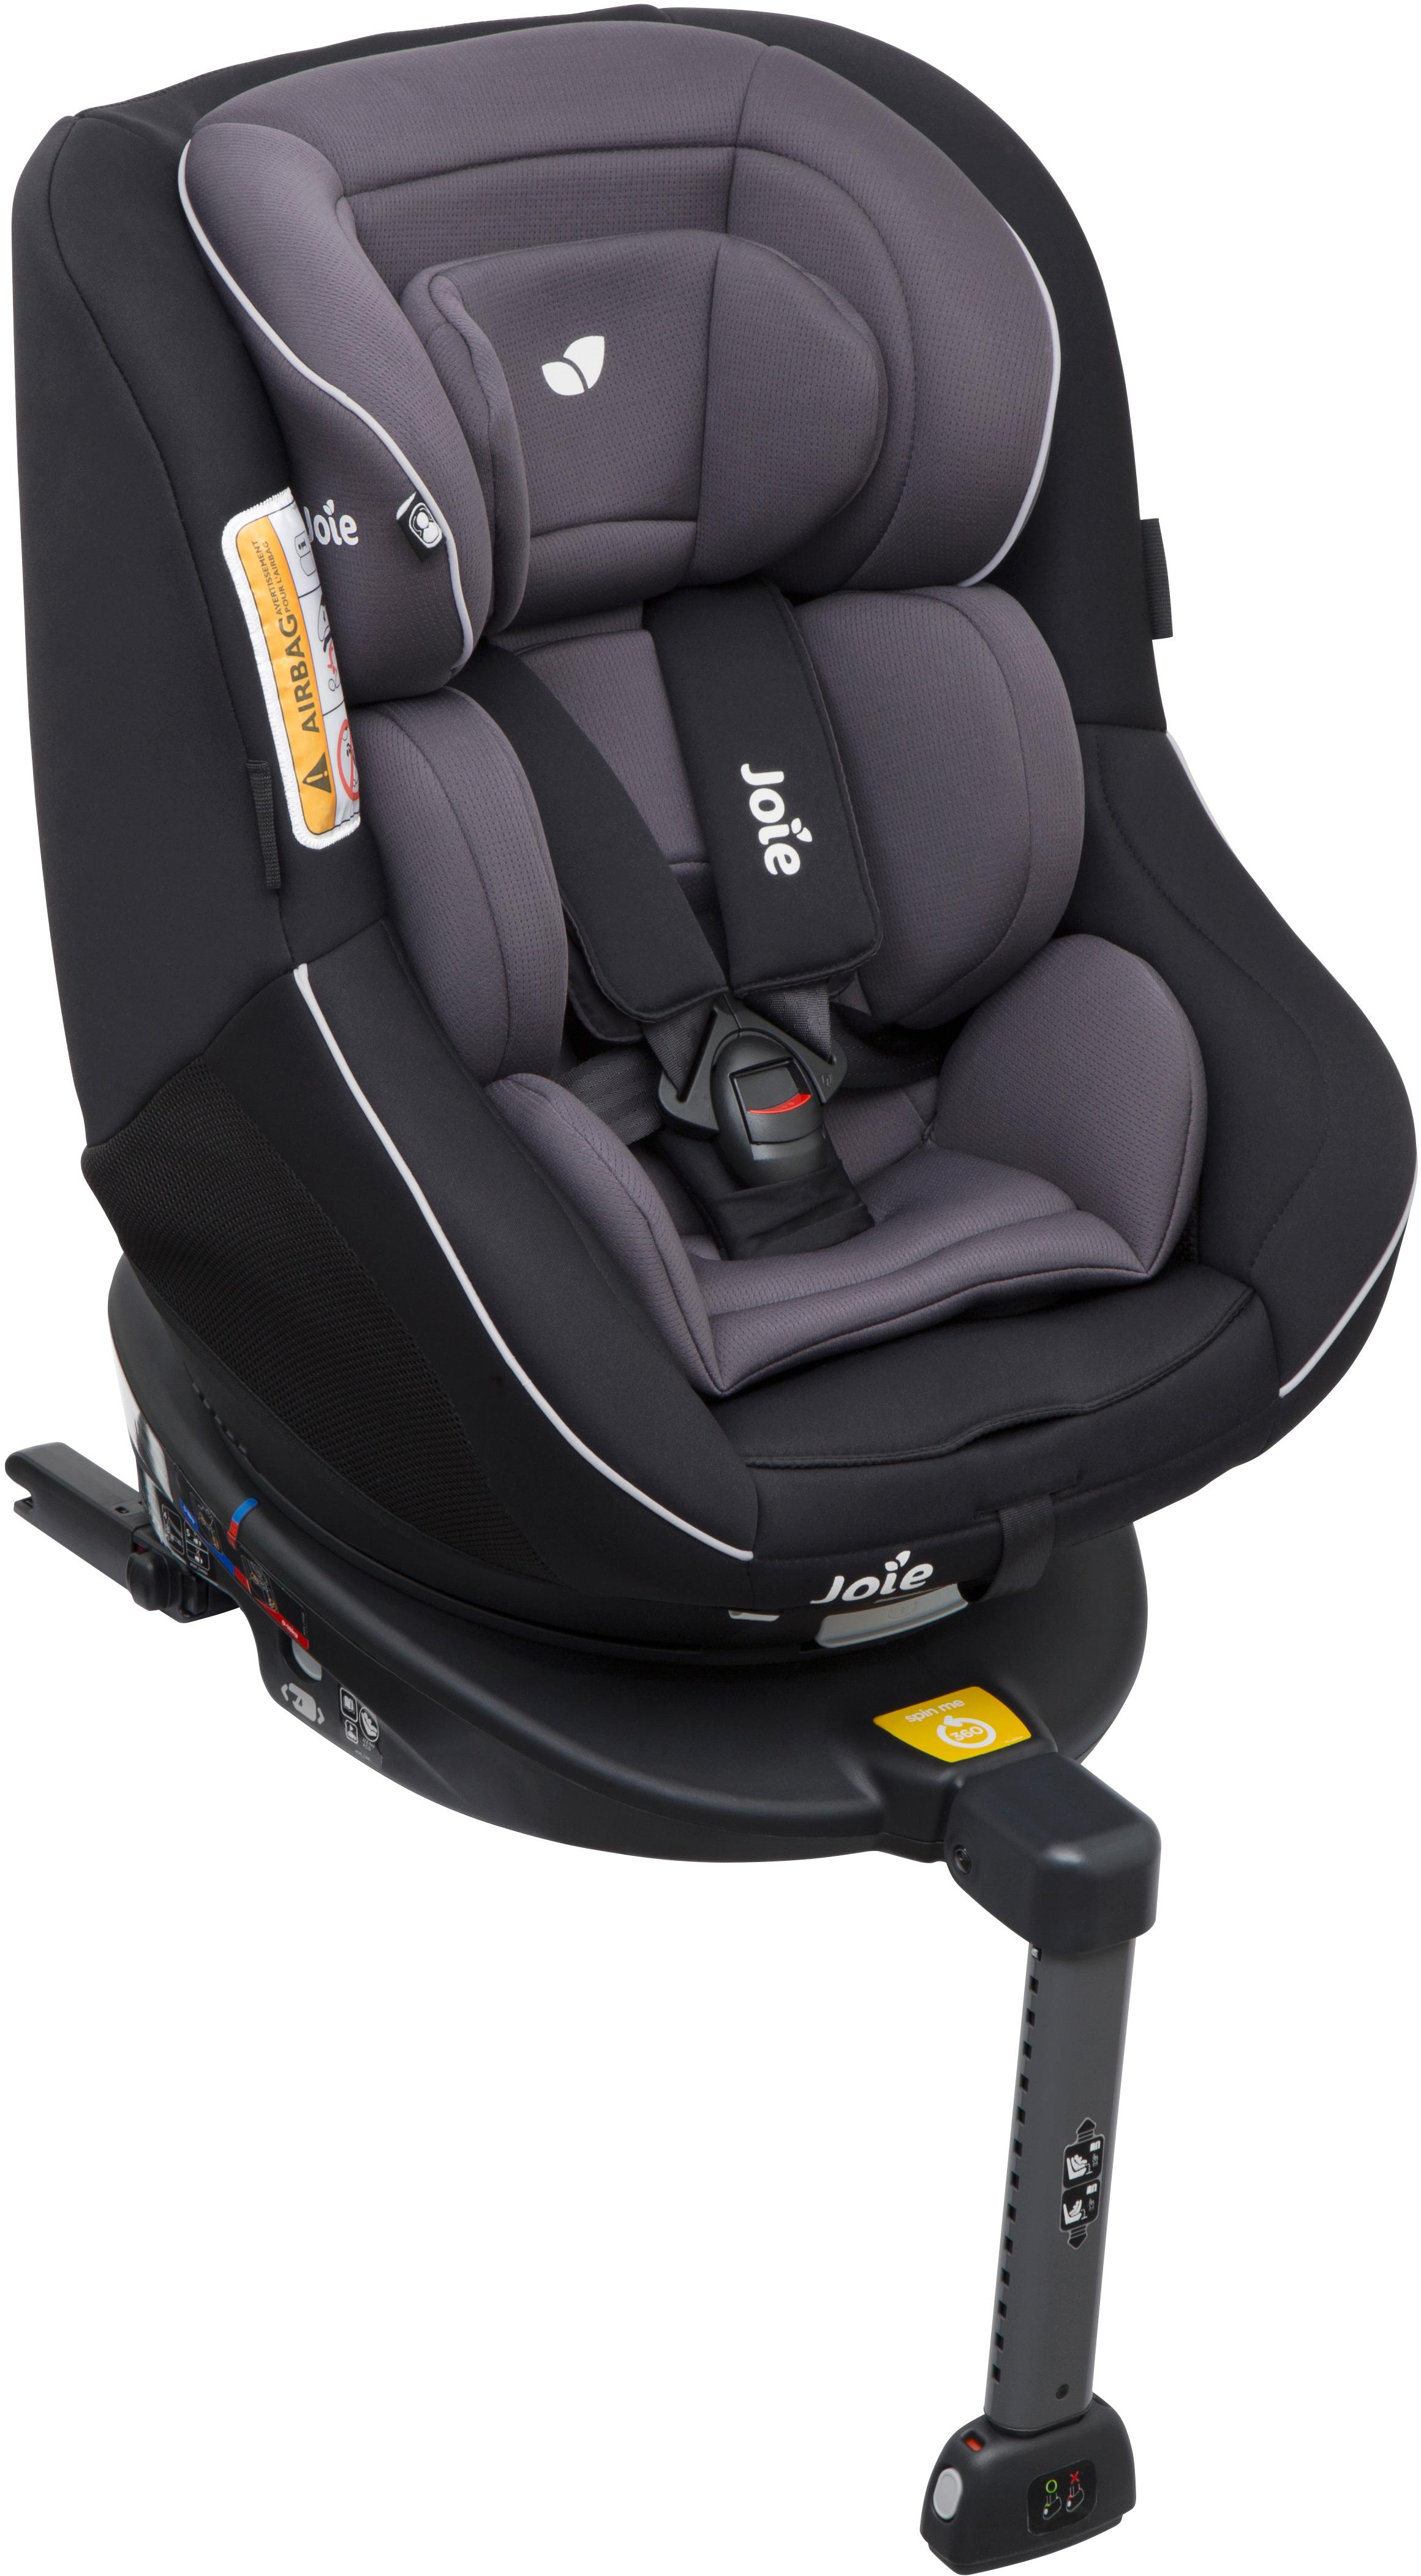 Joie Spin 360 Baby & Toddler Car Seat - Black